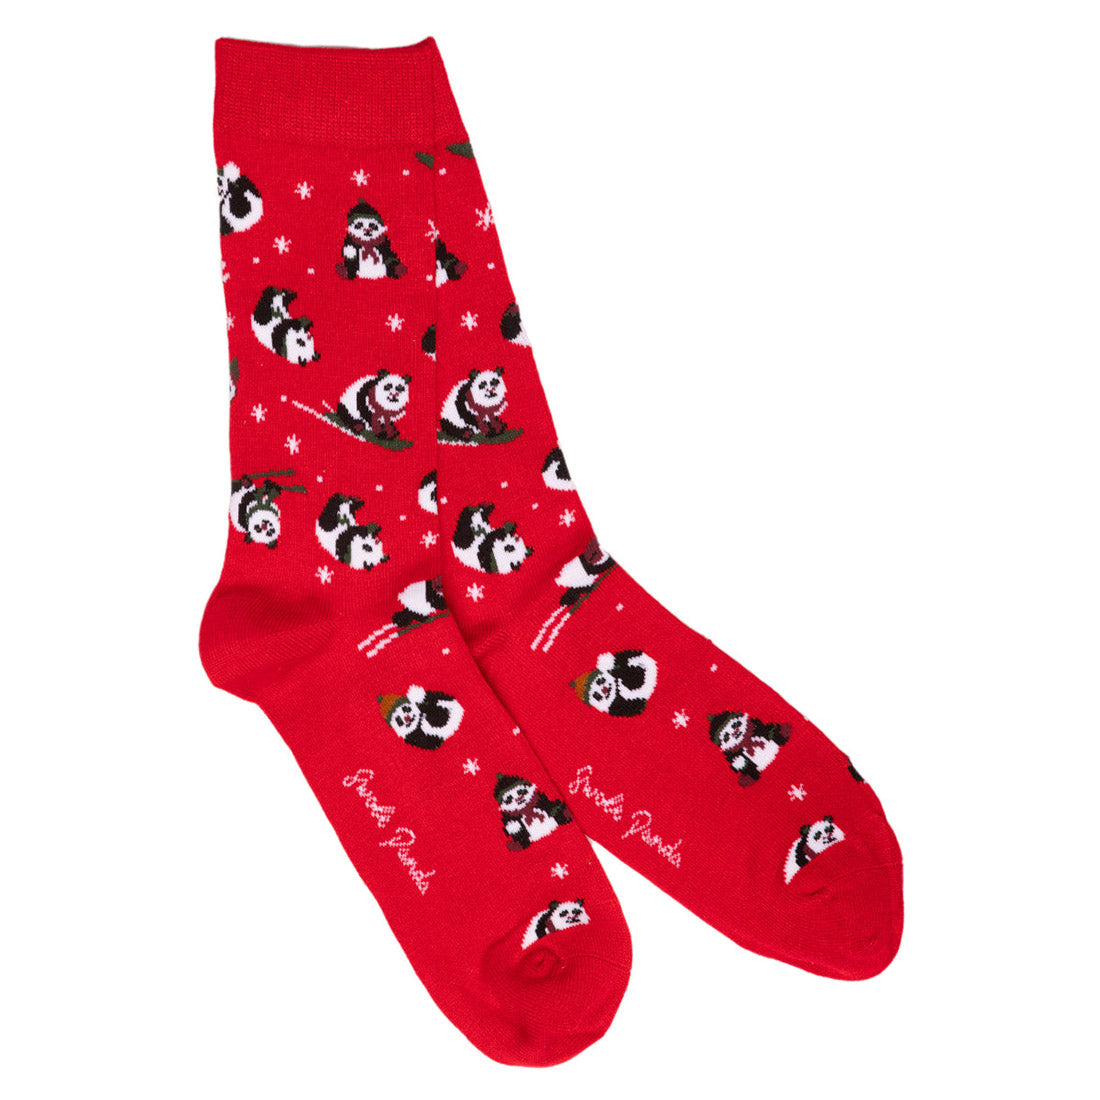 socks-limited-edition-red-panda-bamboo-socks-1_554d3a73-e529-4daf-a1d8-c0ea21a36920.jpg